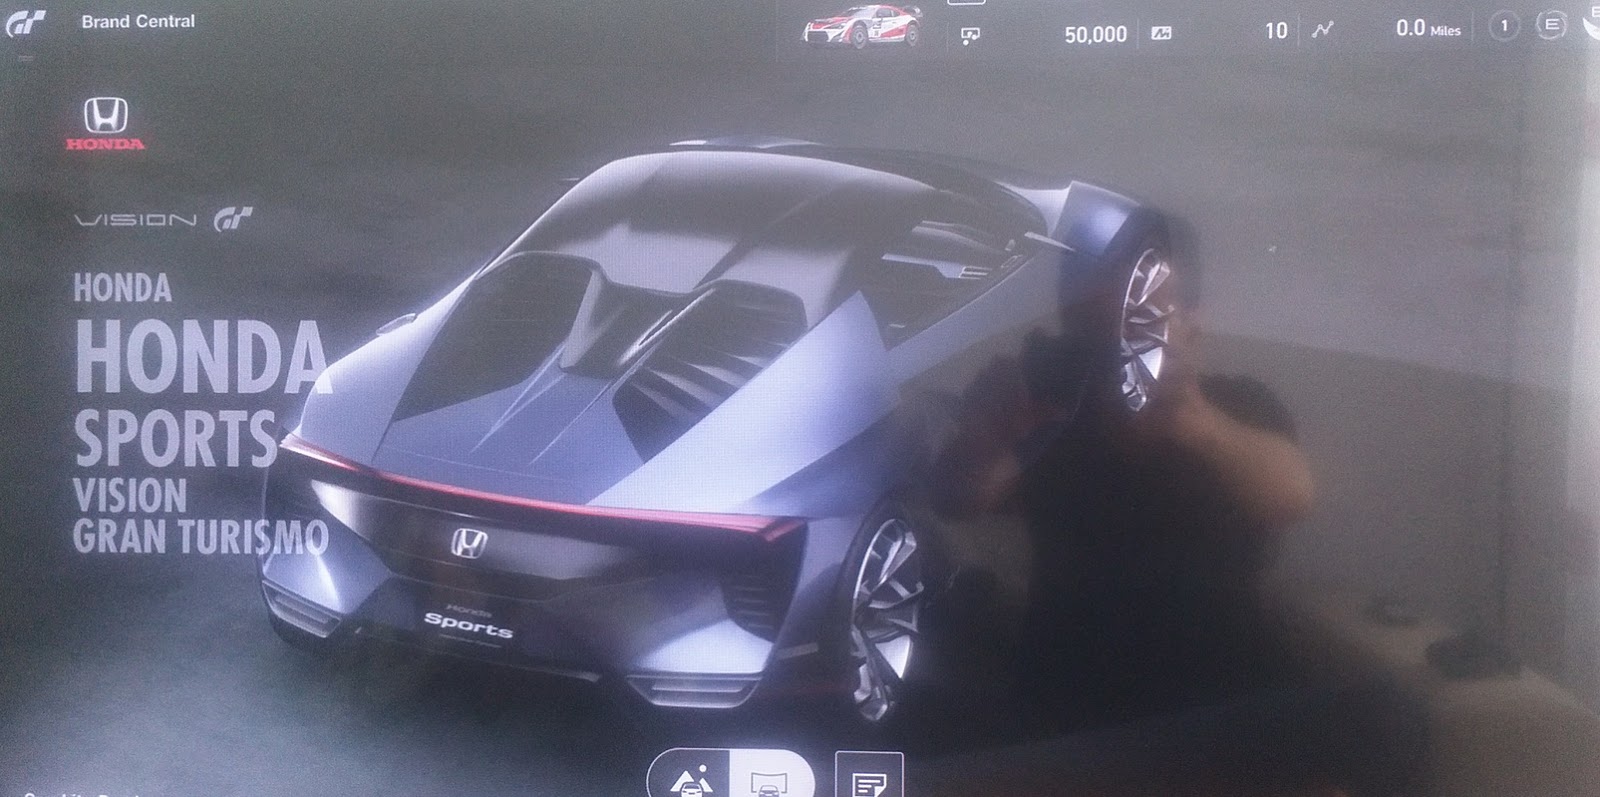 Honda Sports Vision Gran Turismo - Foto leaked